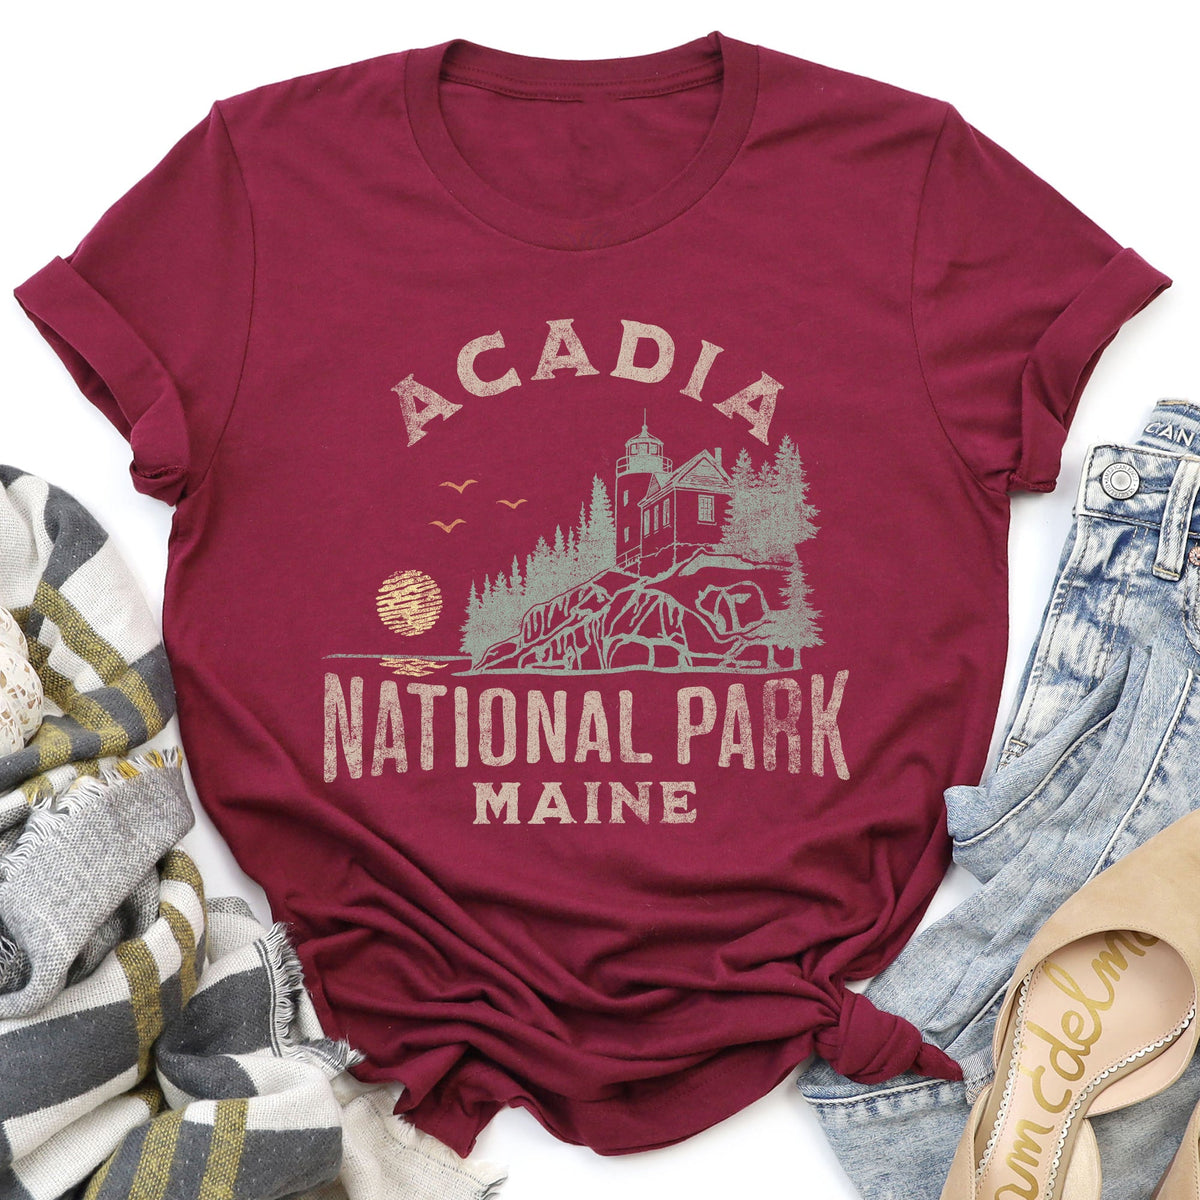 Acadia National Park Super Soft Tshirt